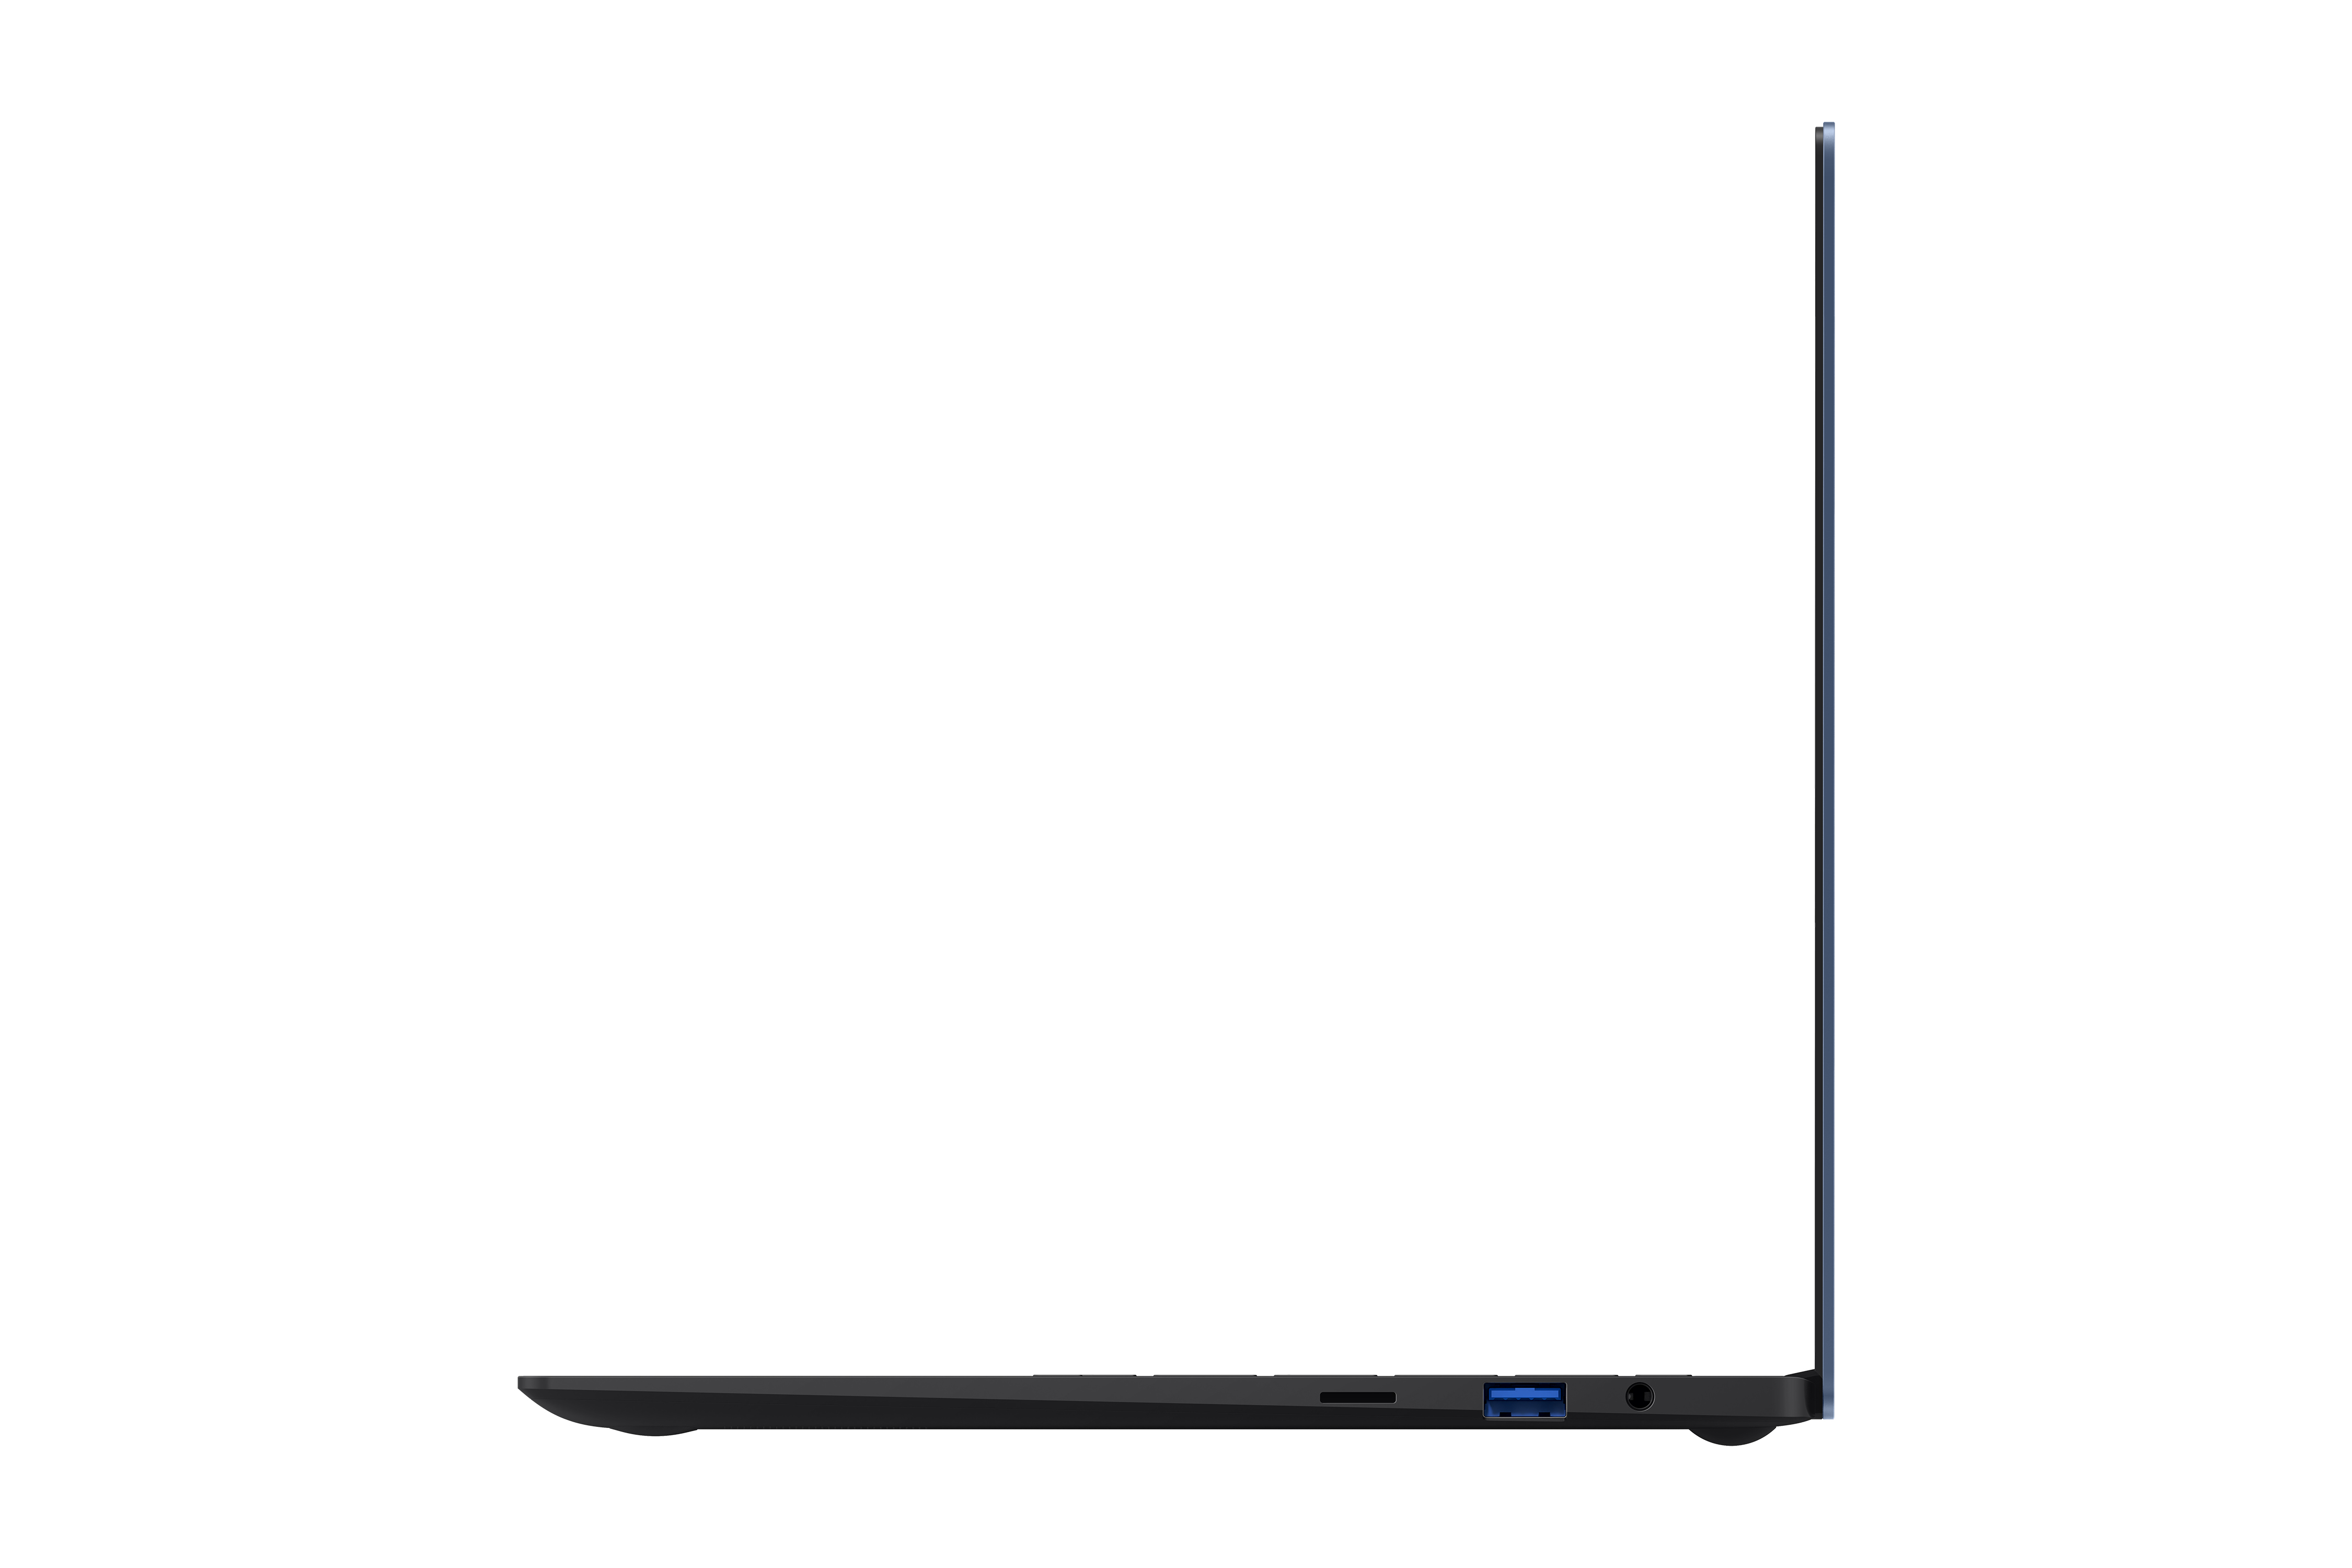 SAMSUNG Galaxy Book Pro 13.3" Laptop - Intel Core i5 - 8GB Memory - 256GB SSD - Mystic Navy - image 4 of 21